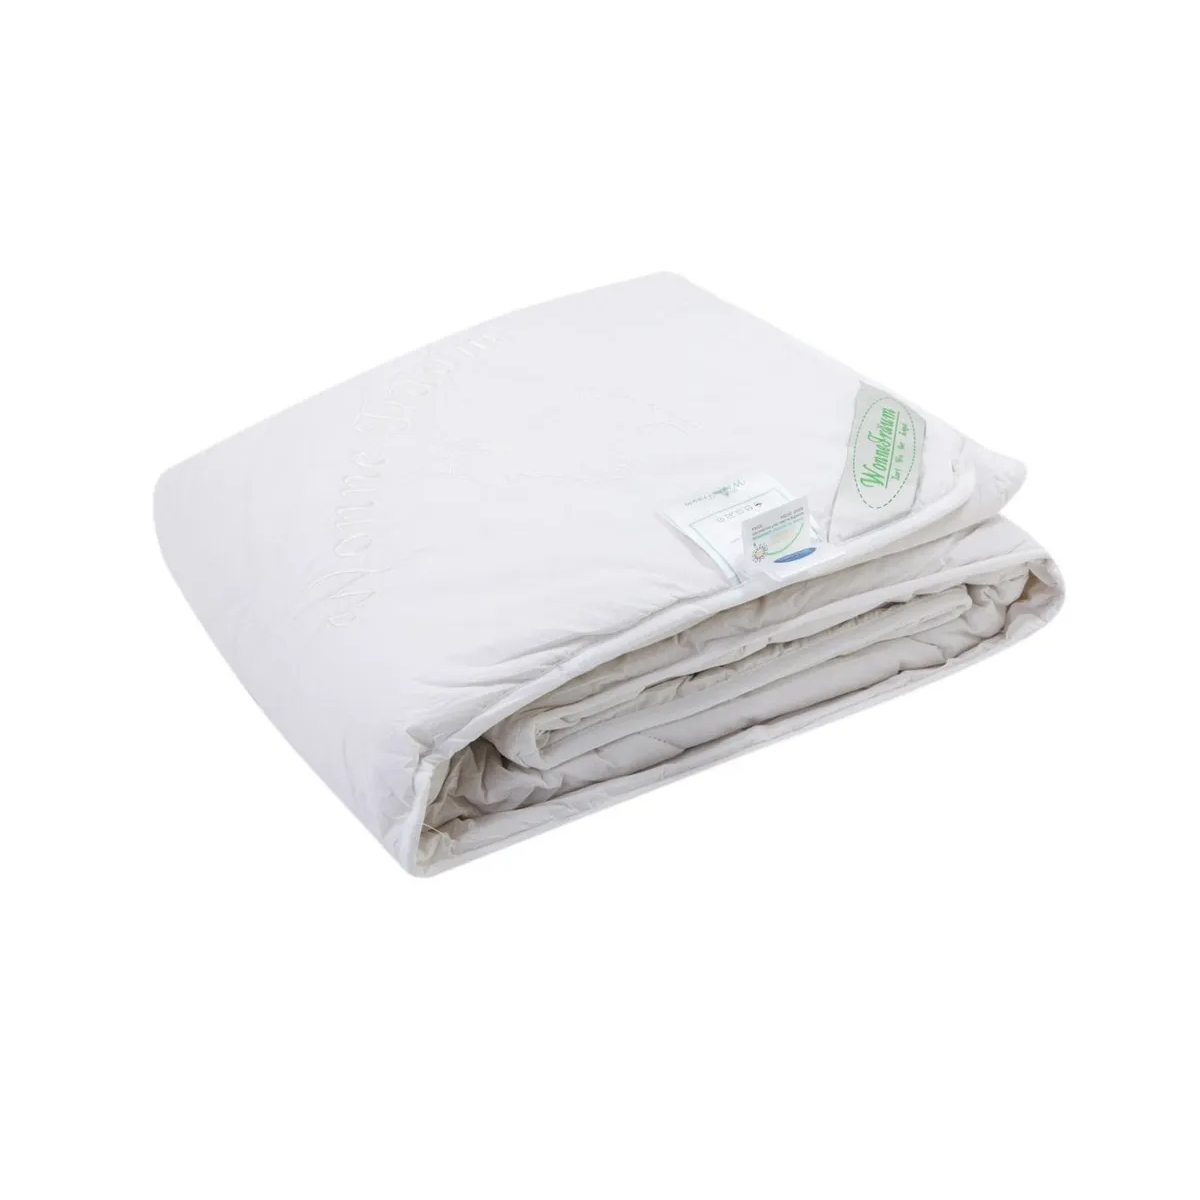 Одеяло шерстяное Wonne Traum белое 150х210 см (2709-26240), цвет белый - фото 1